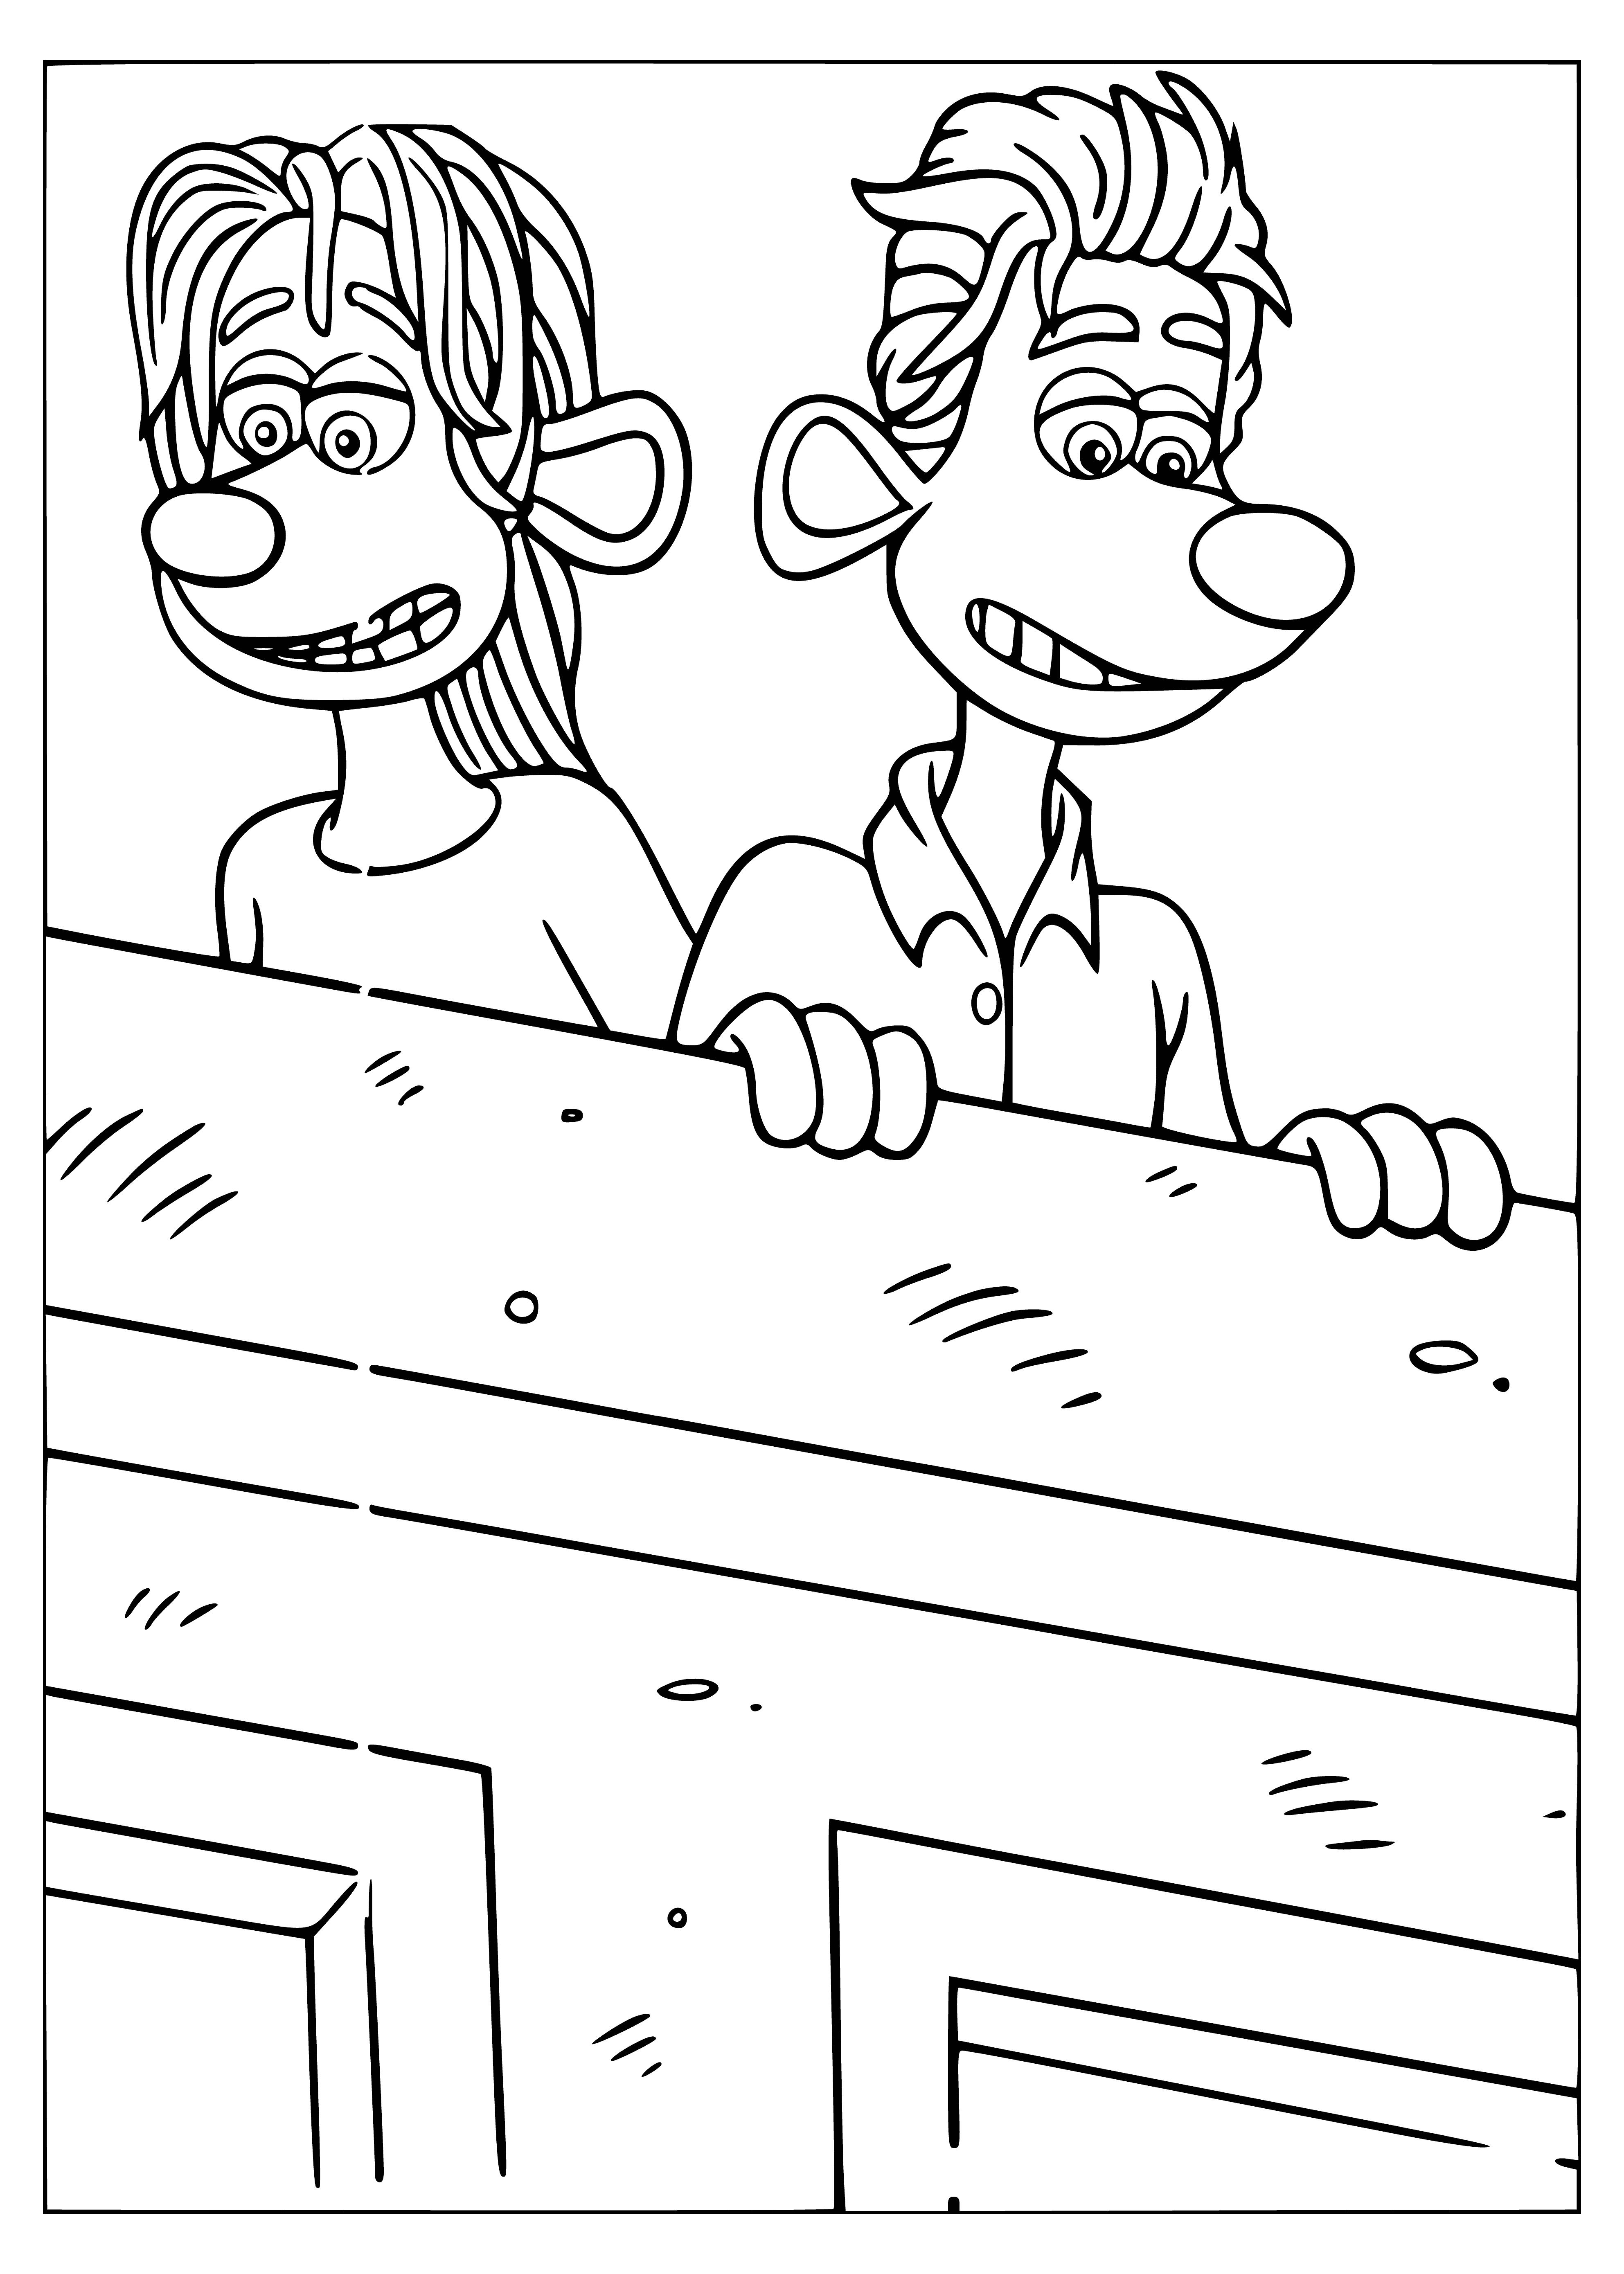 Rita and Roddy coloring page